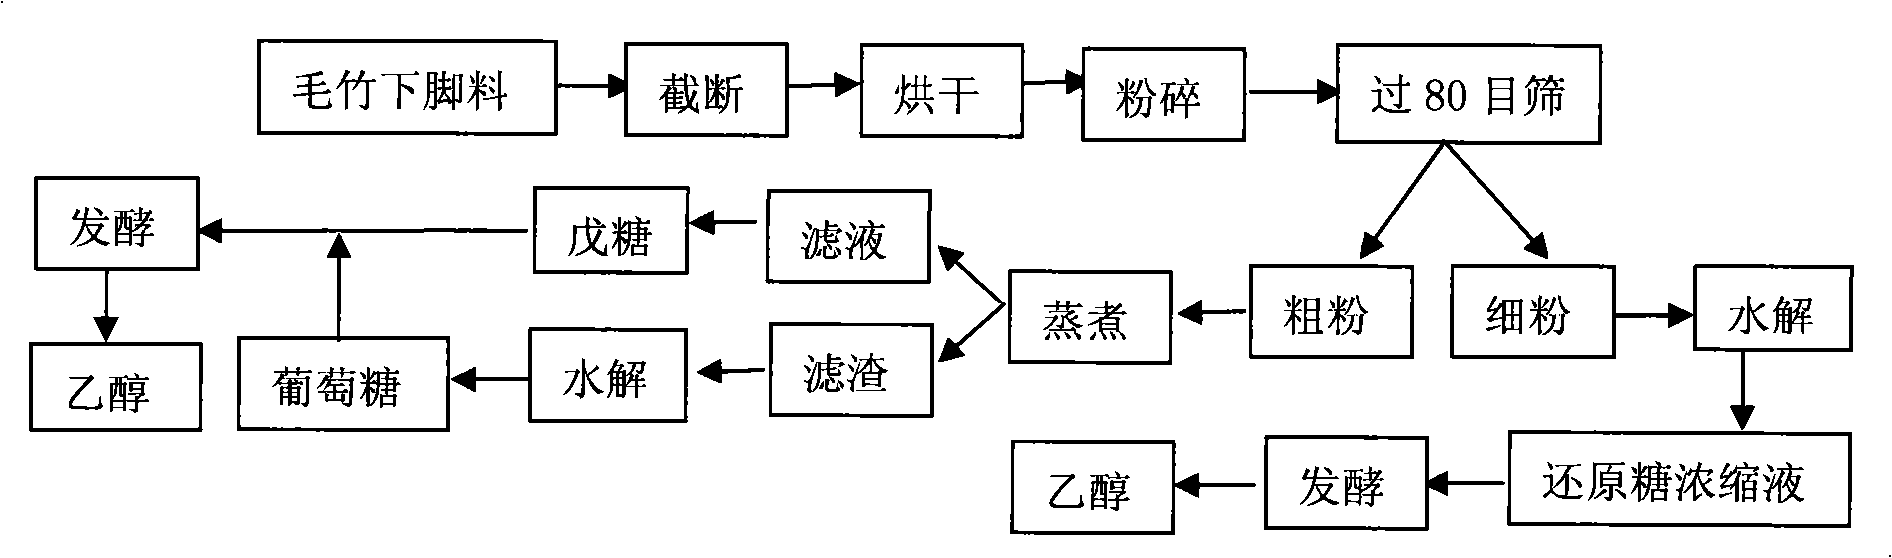 Method for preparing fuel ethanol from bamboo fibers